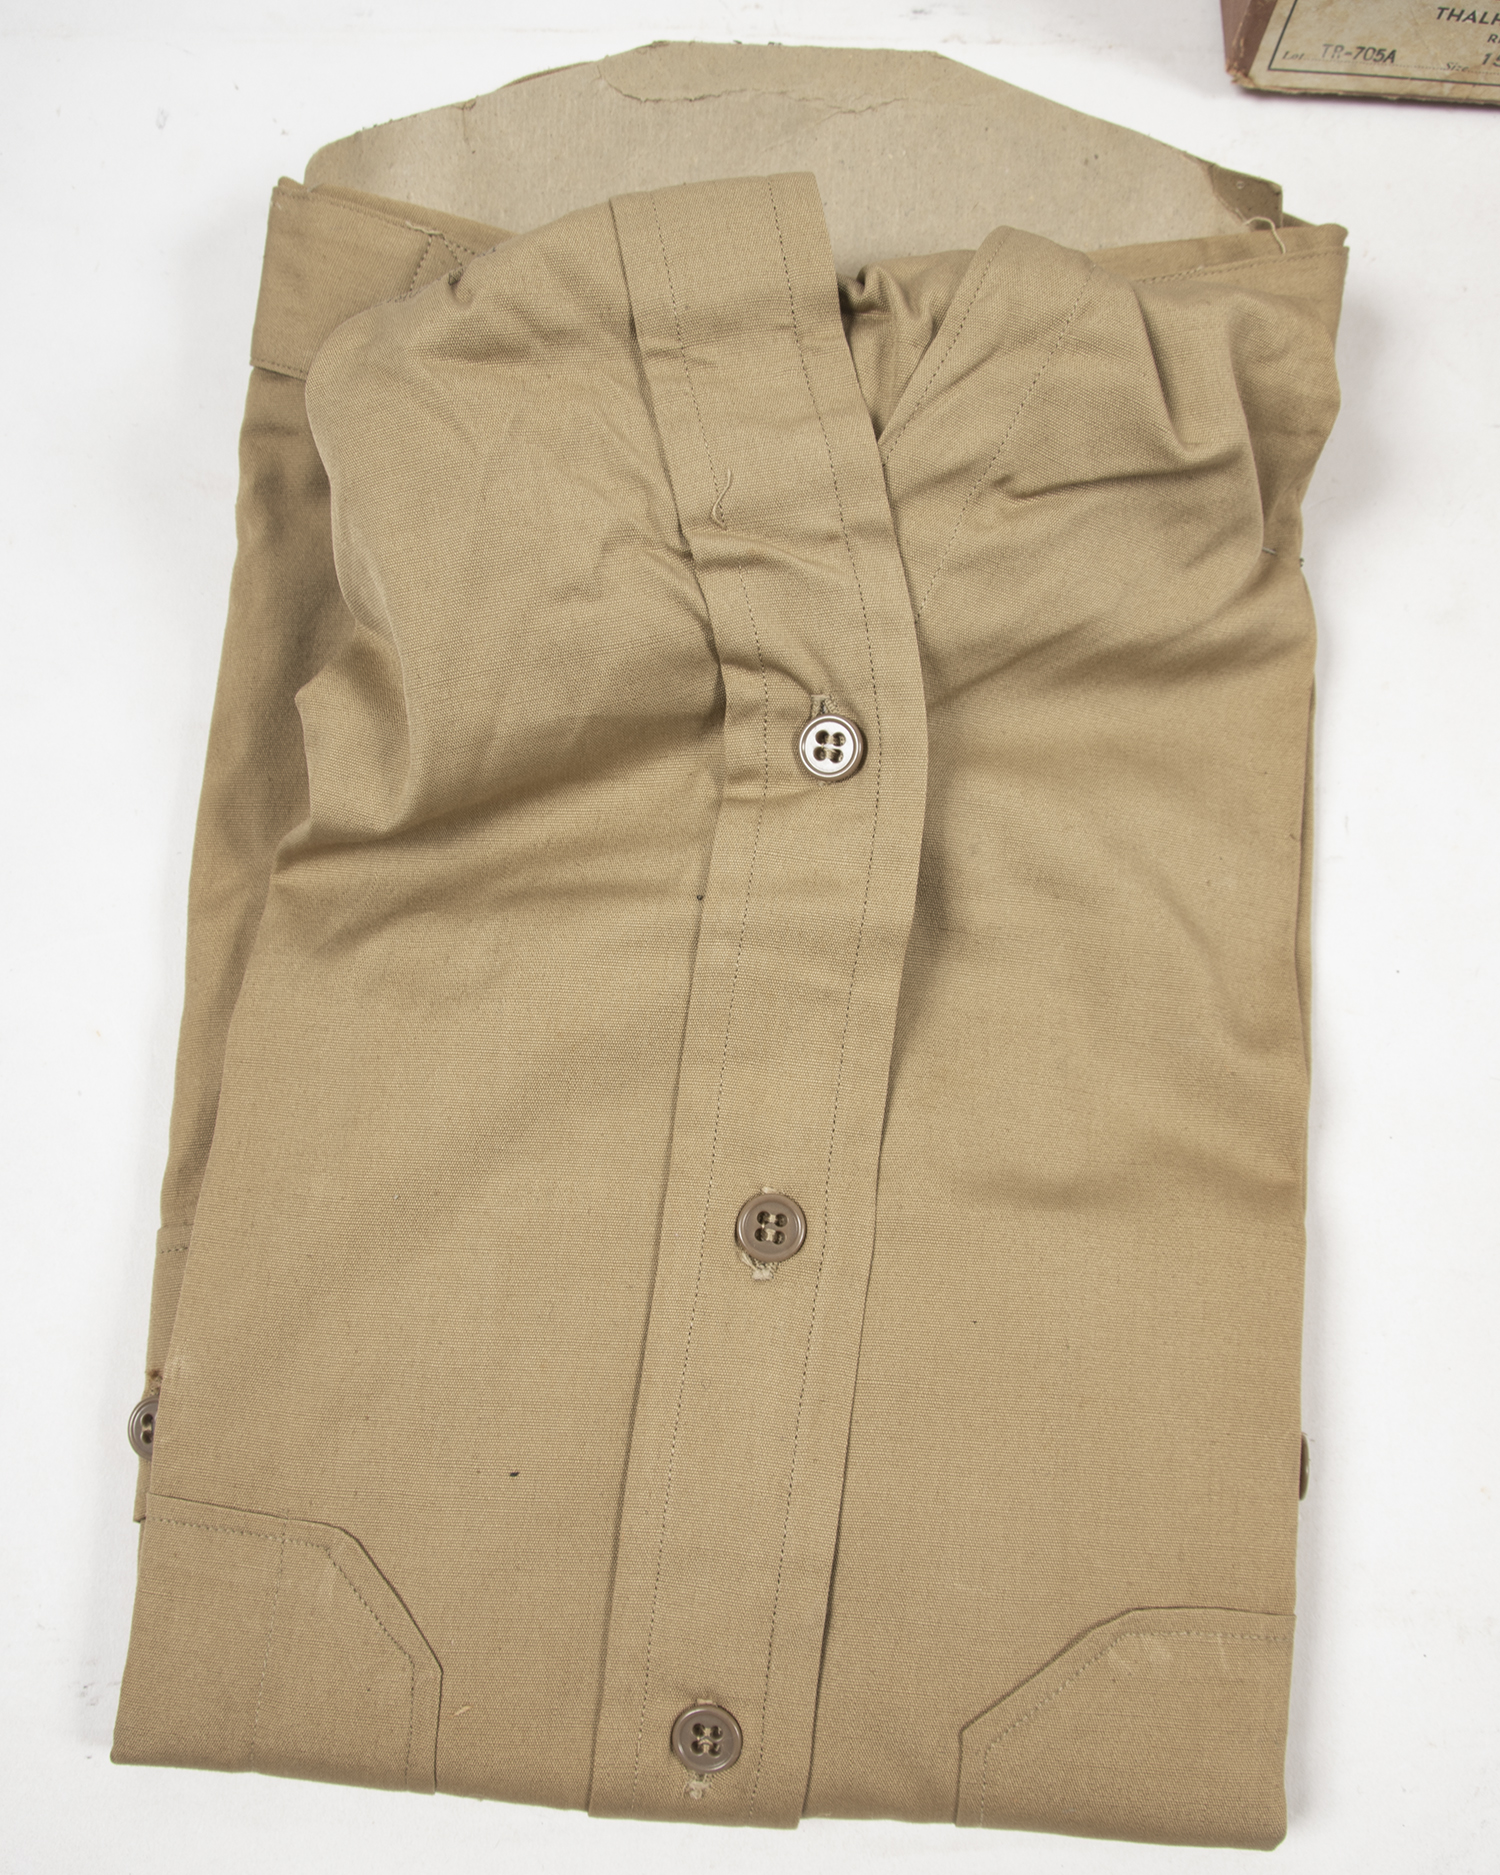 Original Khaki Officer Shirts, size 15 x 34, NIB